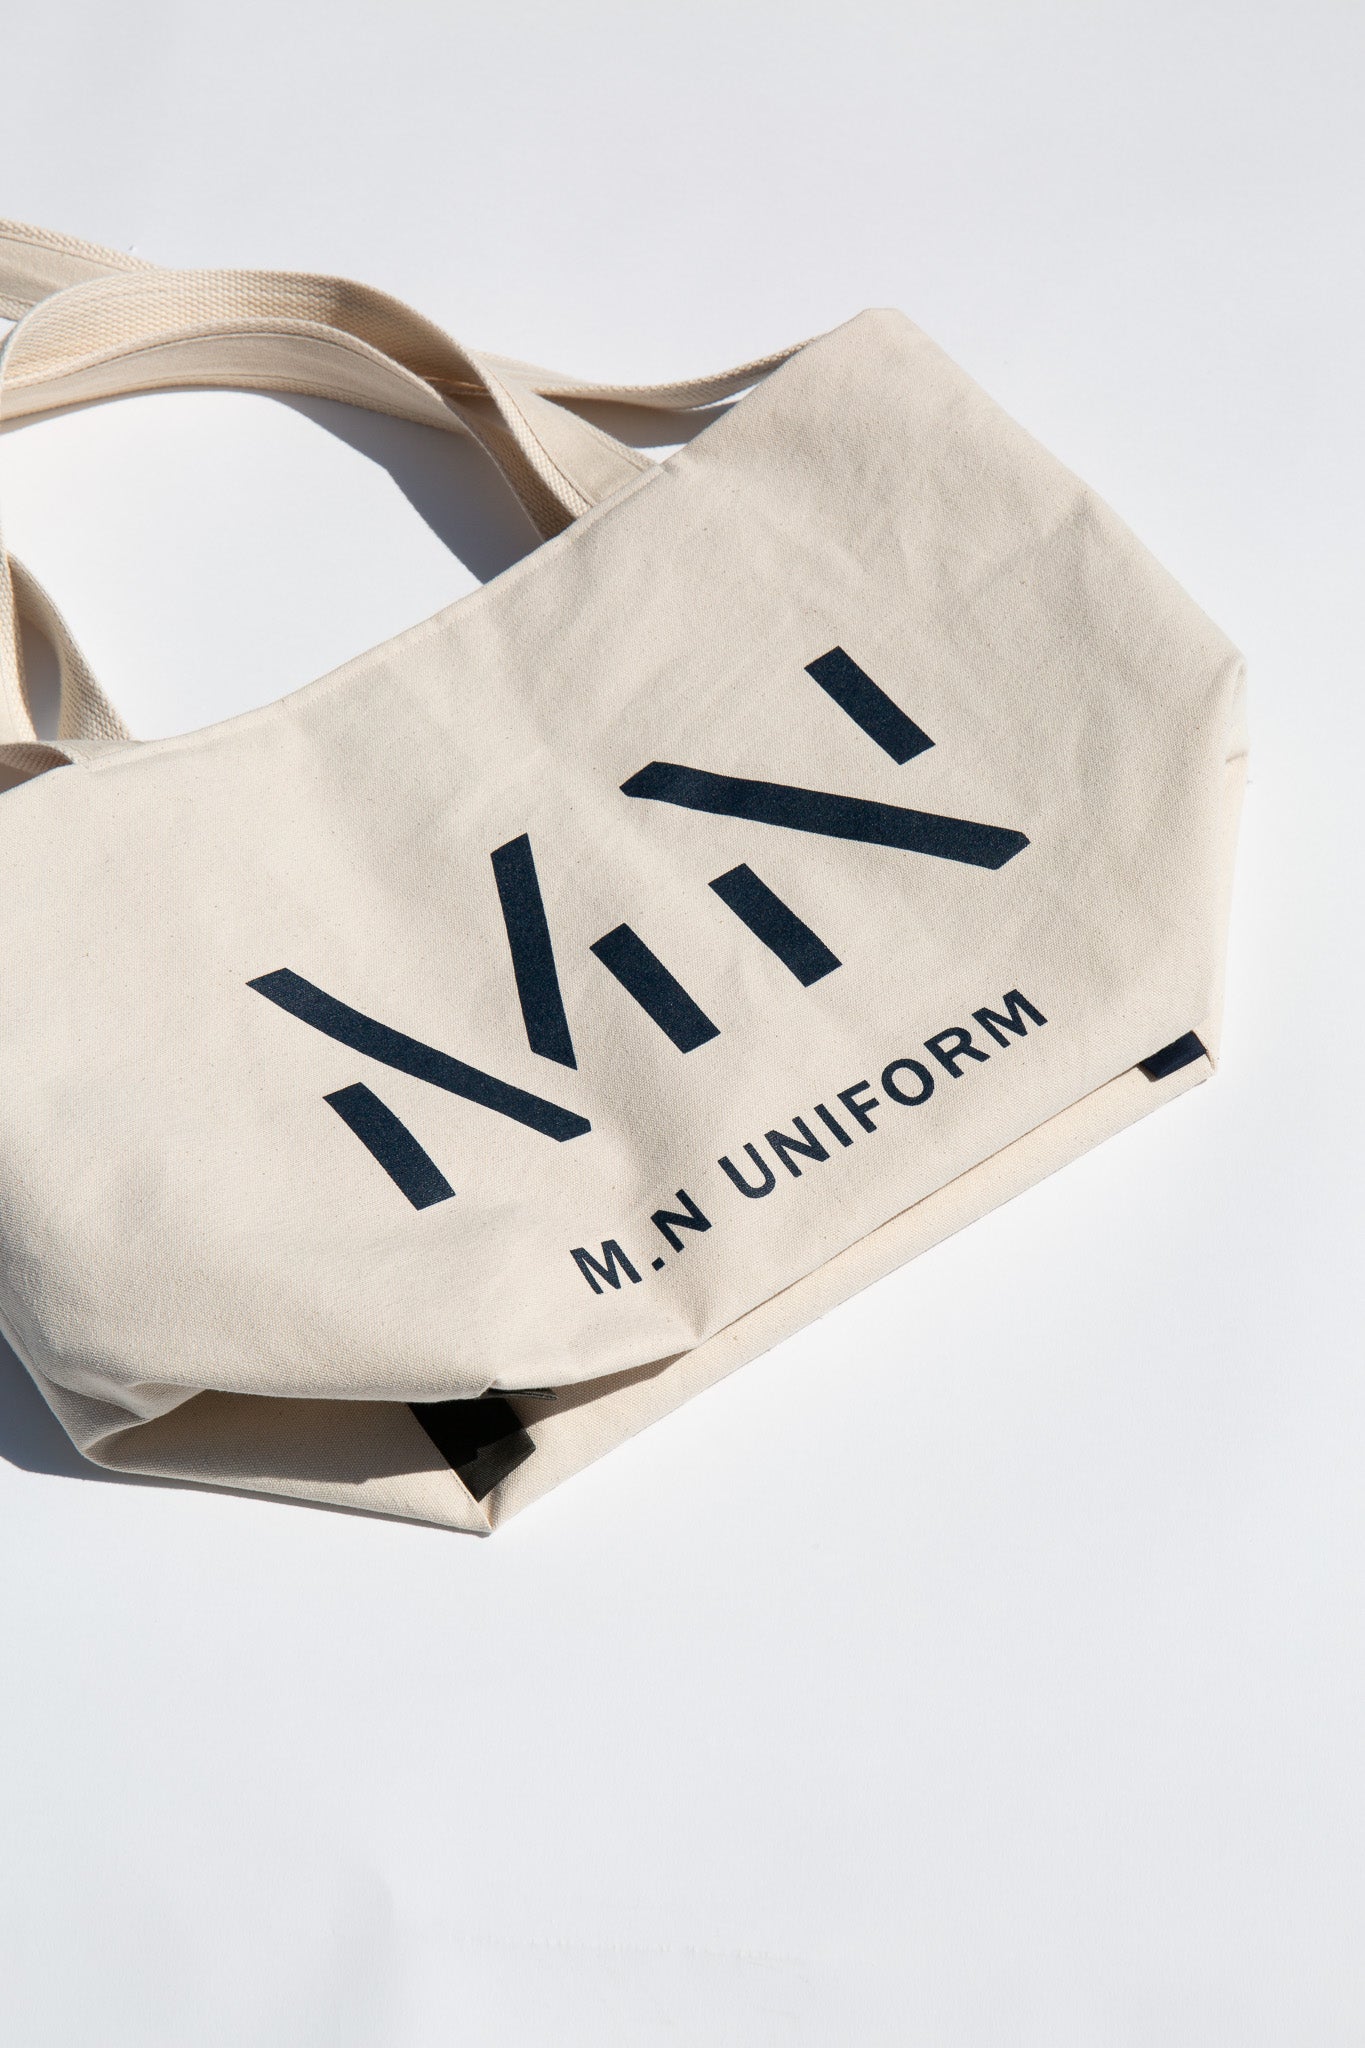 M.N Market Bag